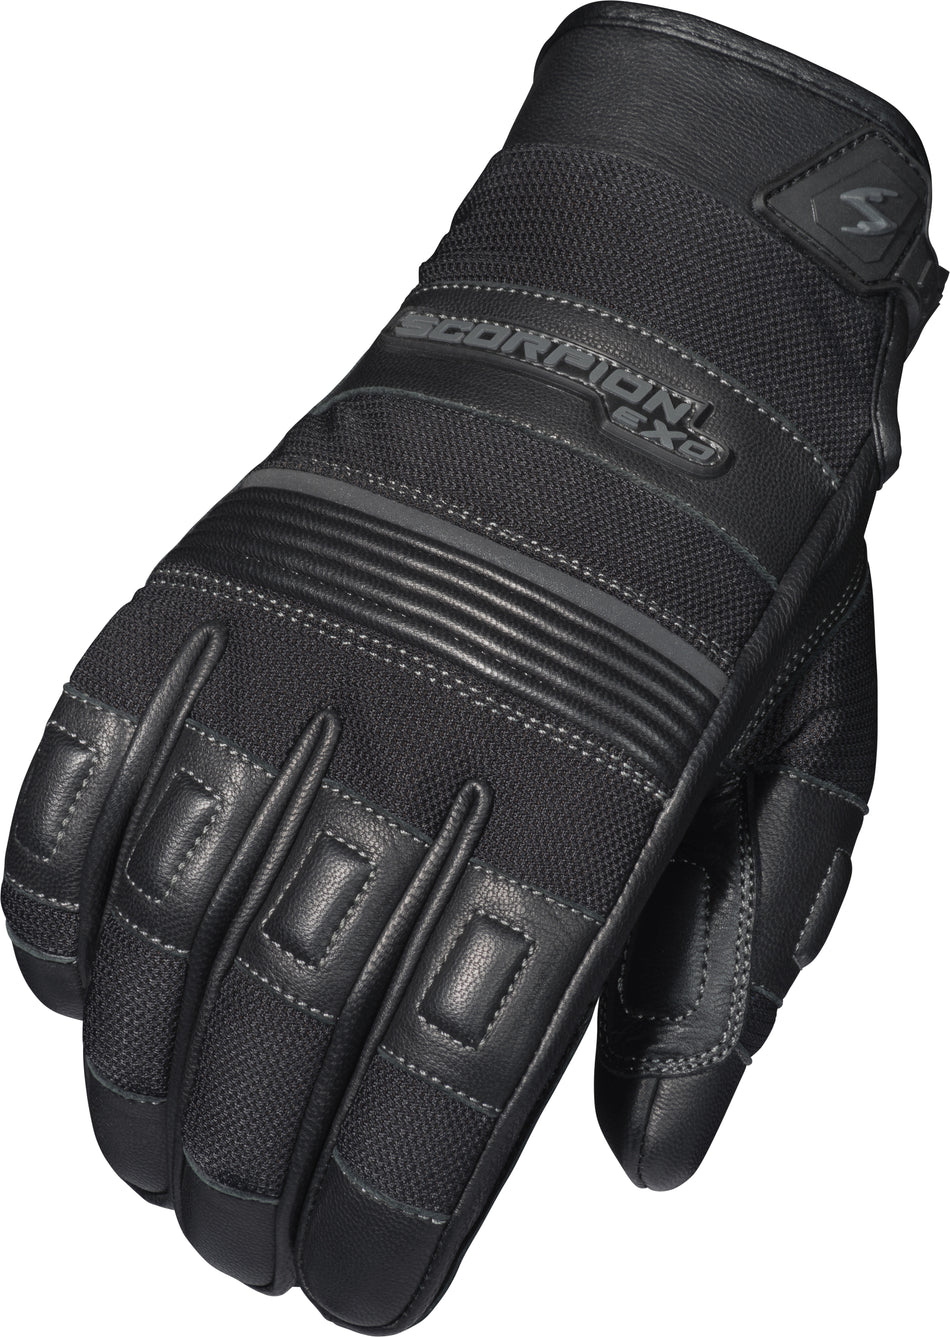 SCORPION EXO Abrams Gloves Black Md G35-034